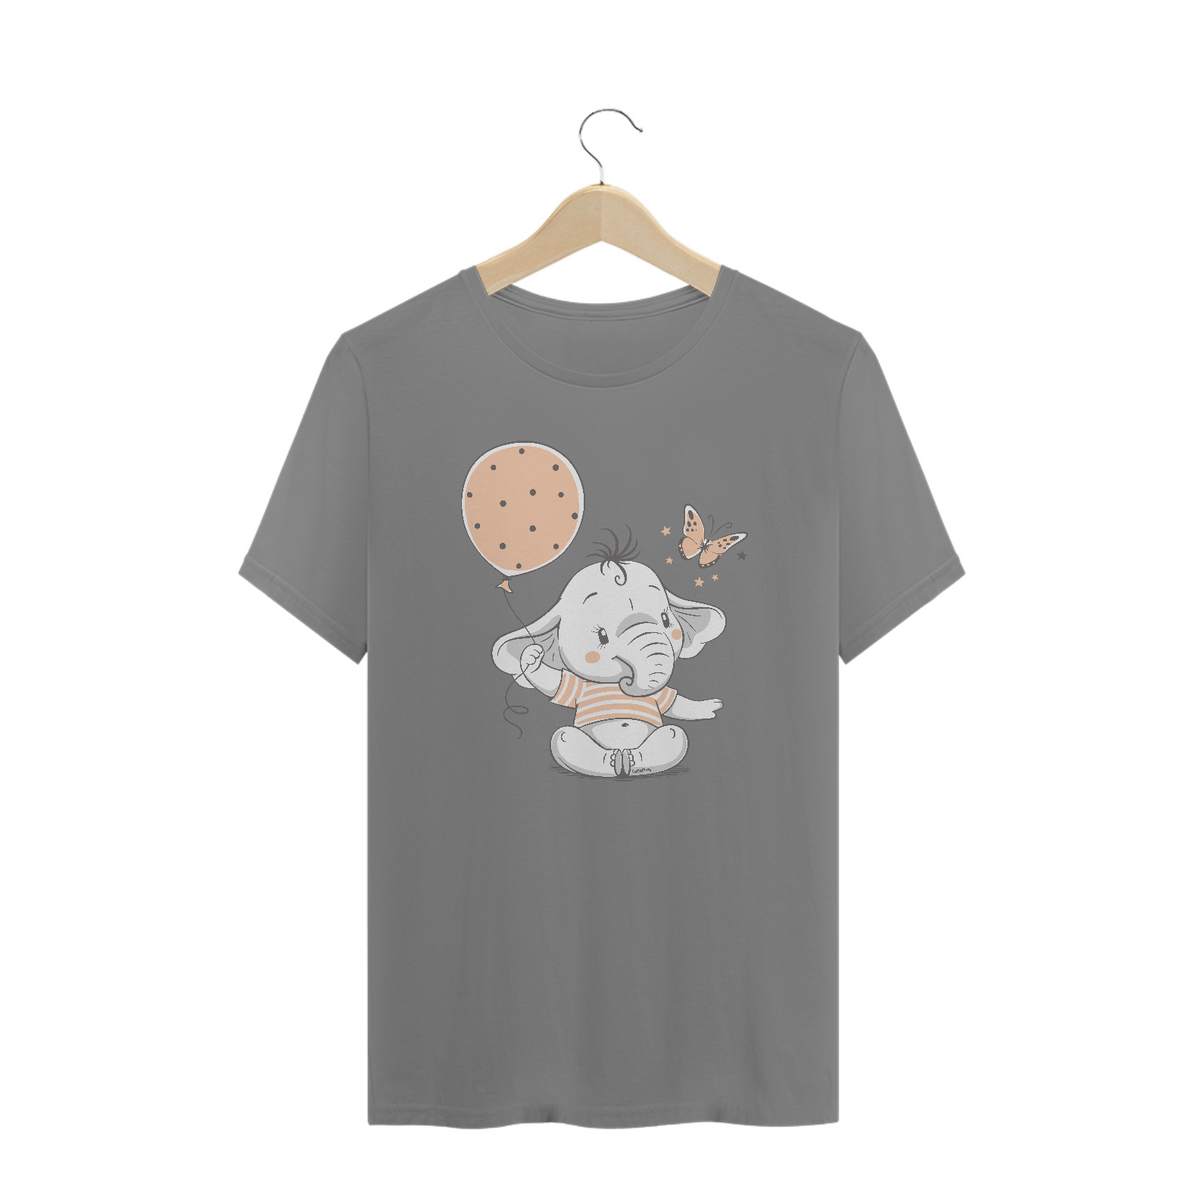 Nome do produto: Camiseta Plus Size Elefante - Modelo 2